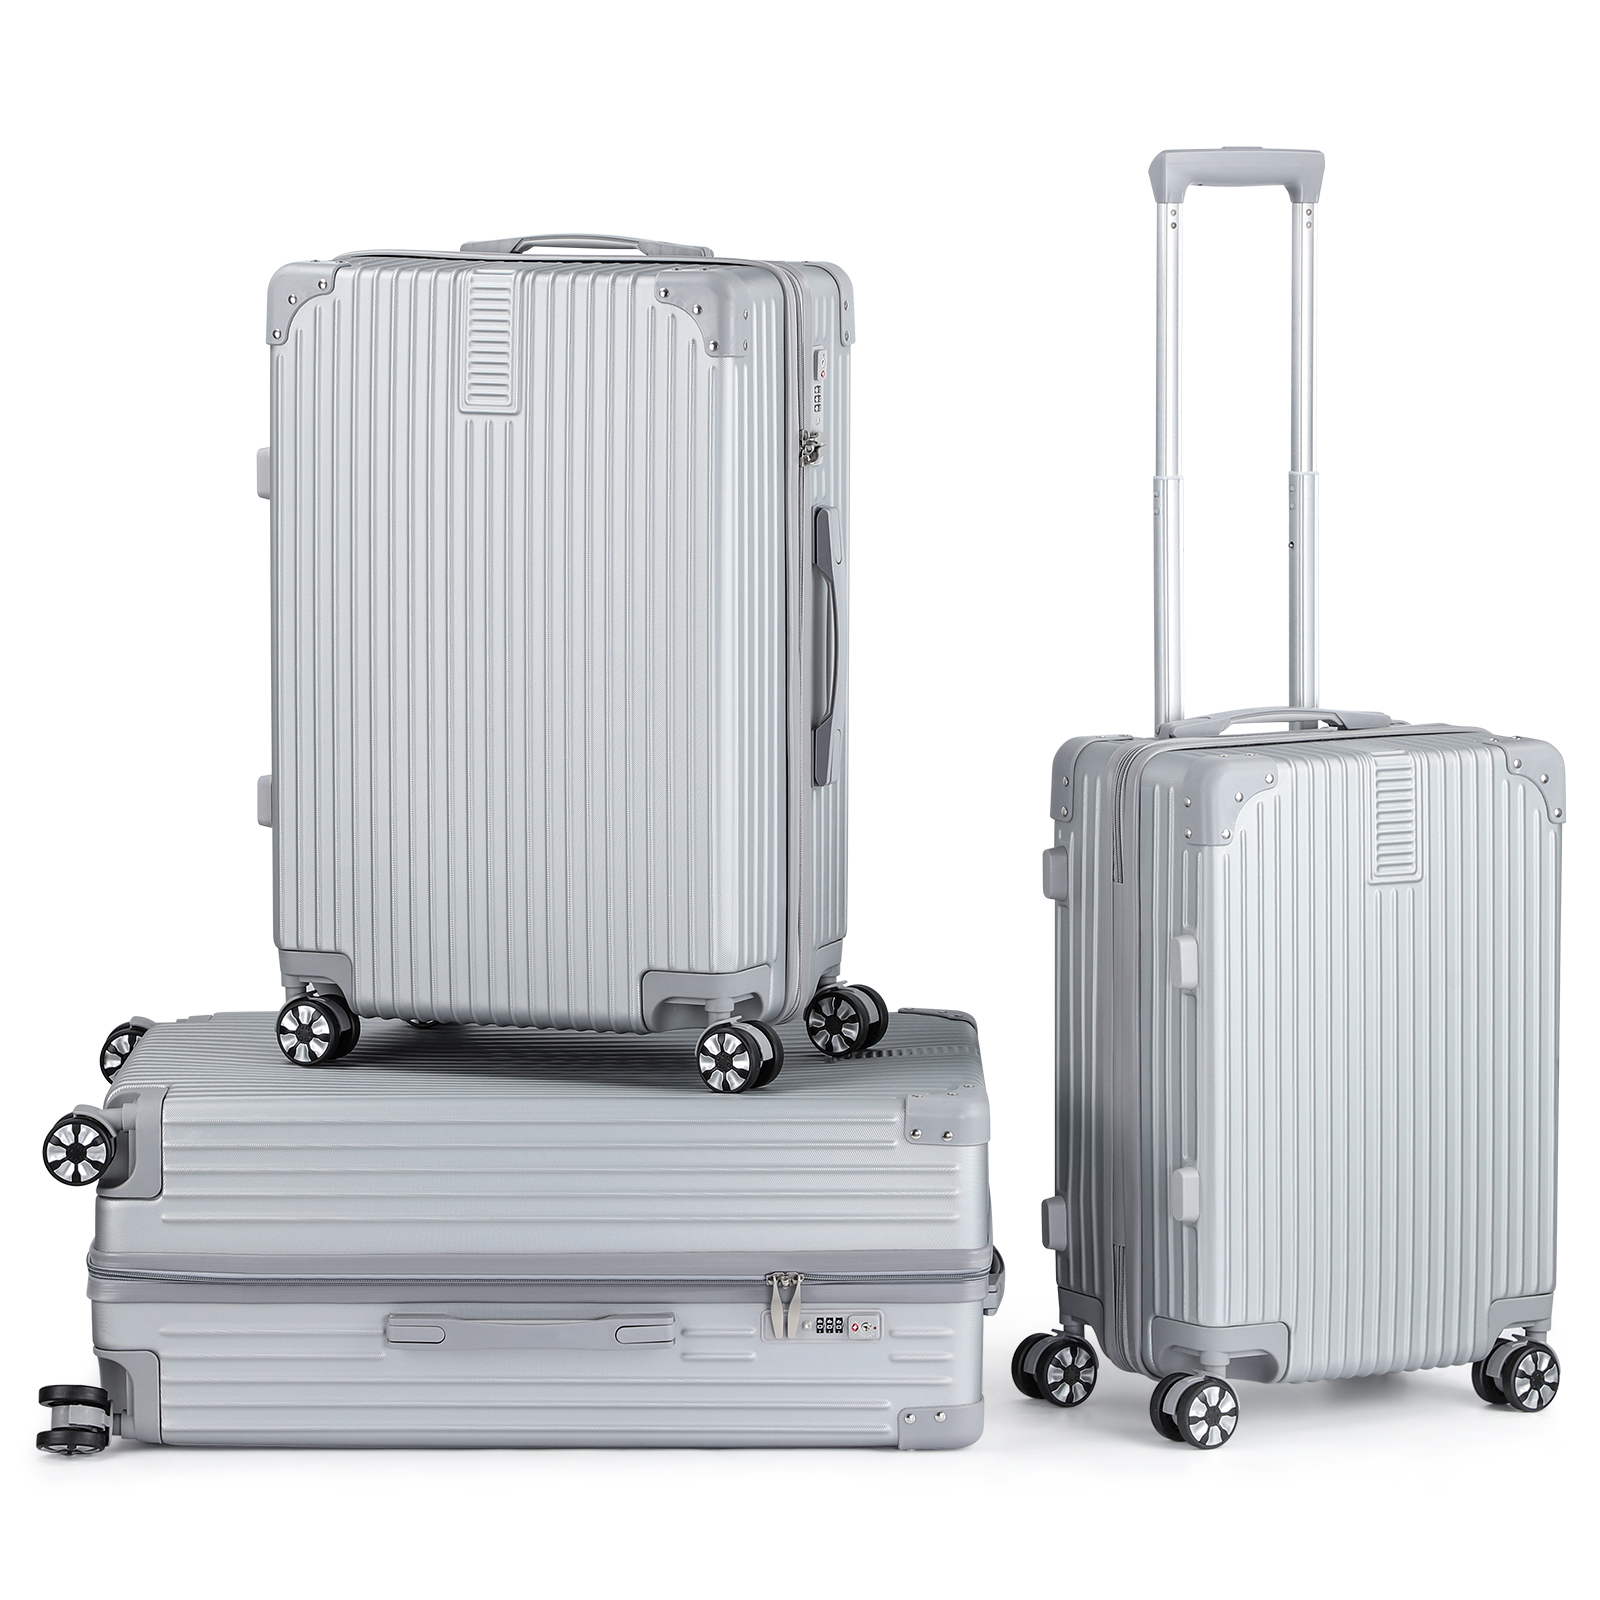 Hikolayae Border Collection Hardside Spinner Luggage Sets in Argent Silver, 3 Piece - TSA Lock - image 1 of 5